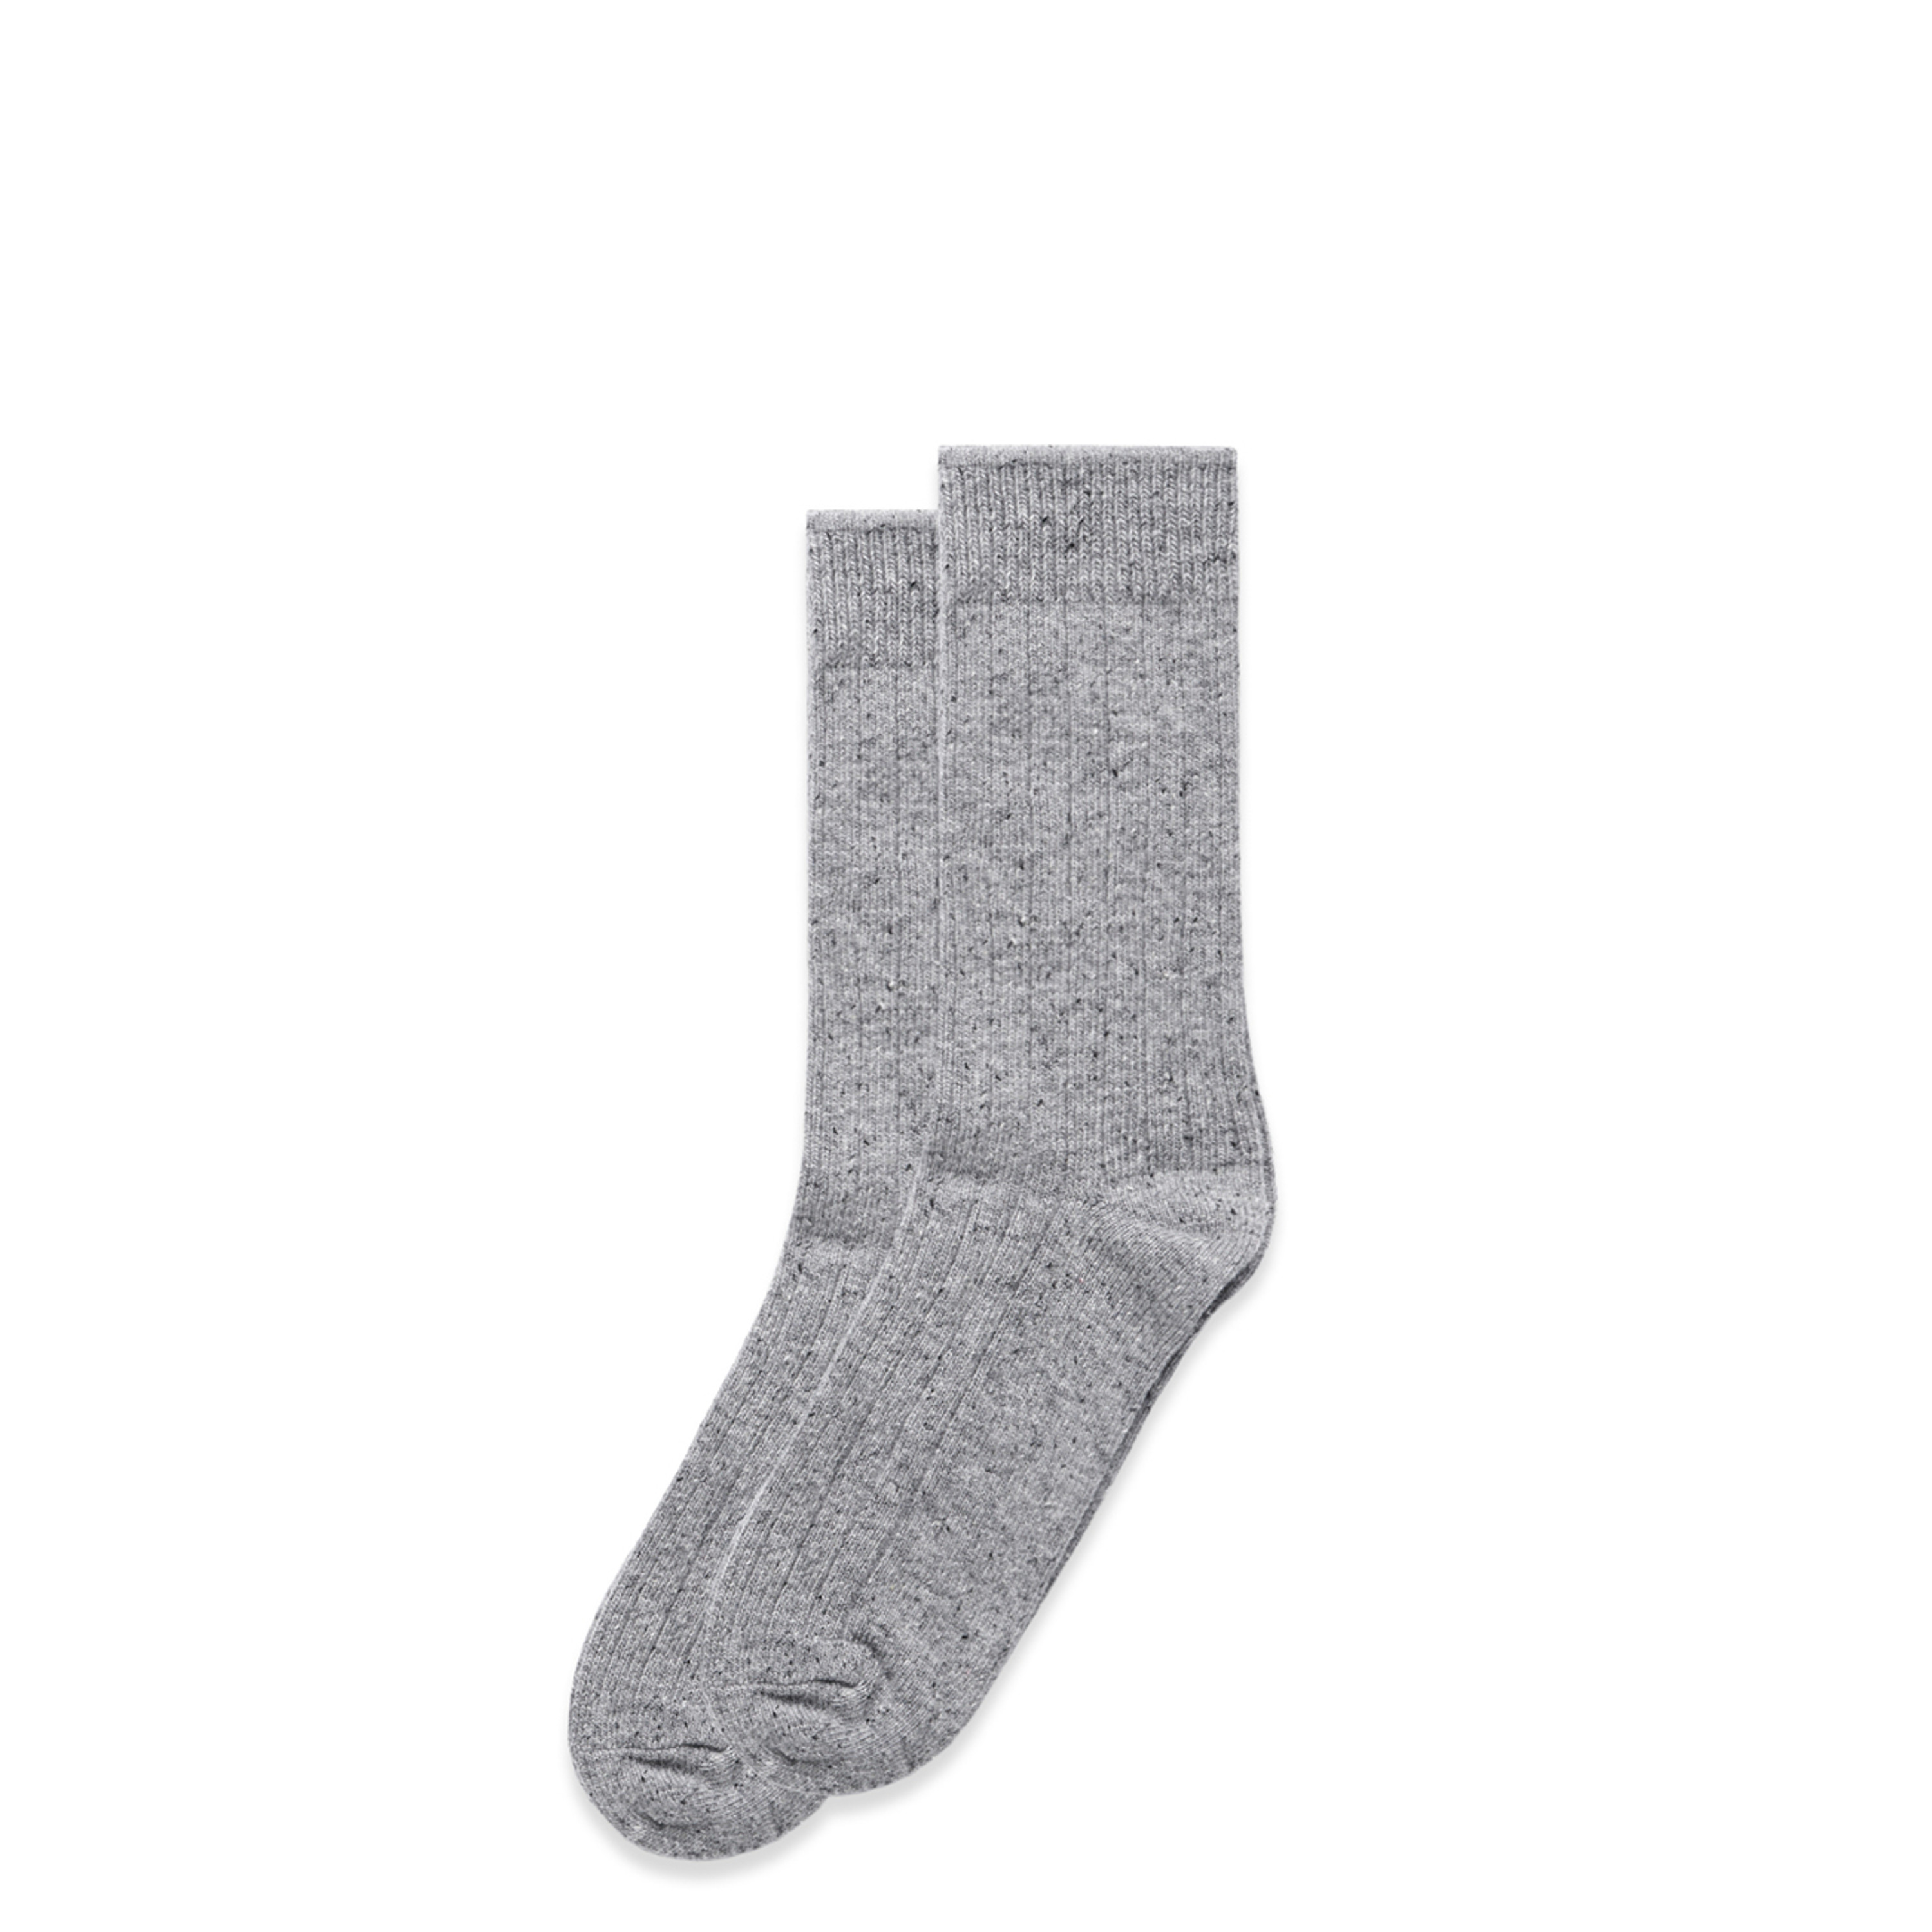 Speckle Socks (2 Pairs) - 1209